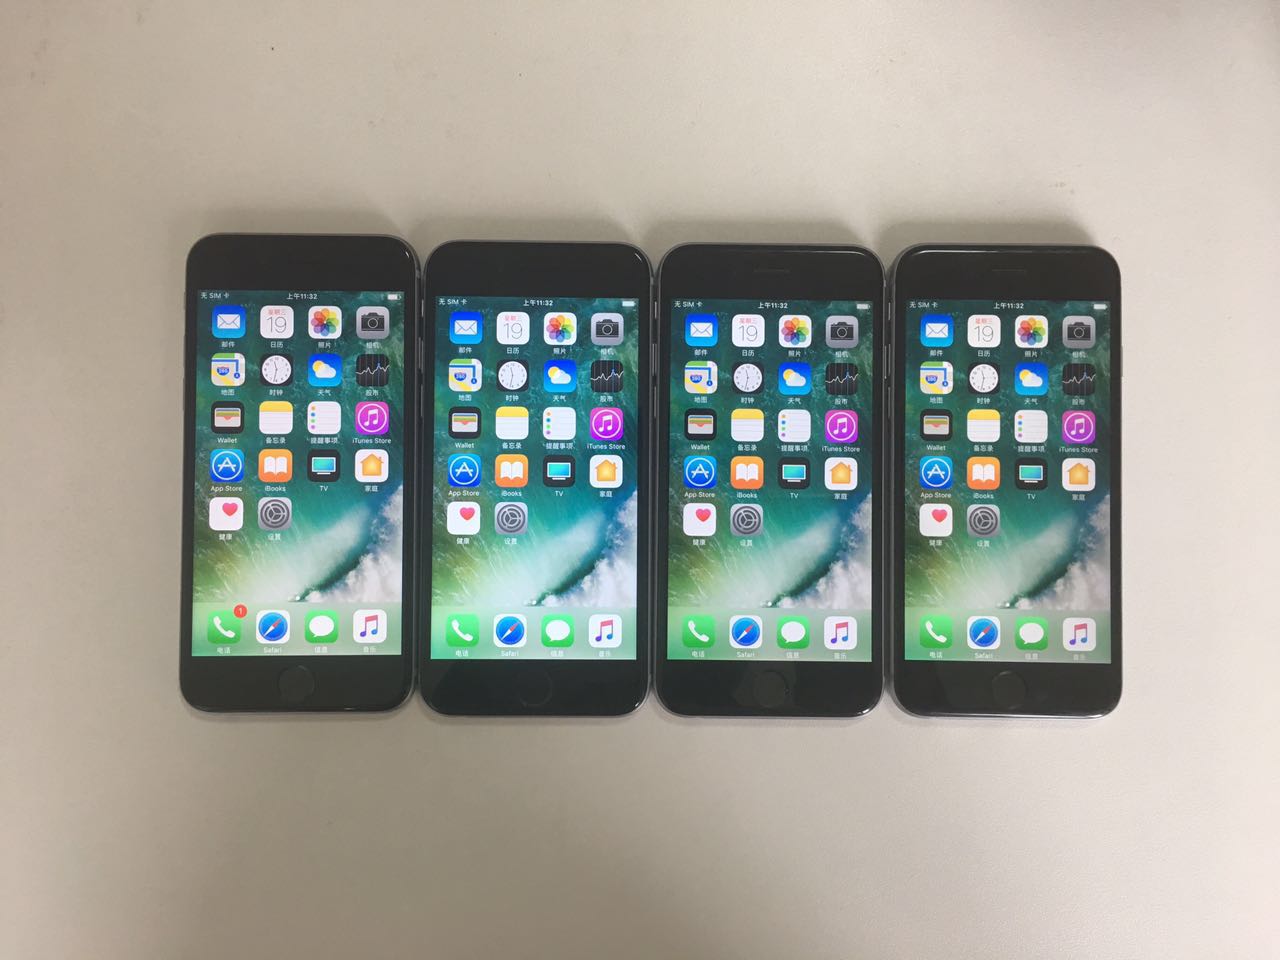 iPhone 6 深空灰色 16G 全网官换 - 二手iPhone 6 - 爱否商城(www.aifou.cn)